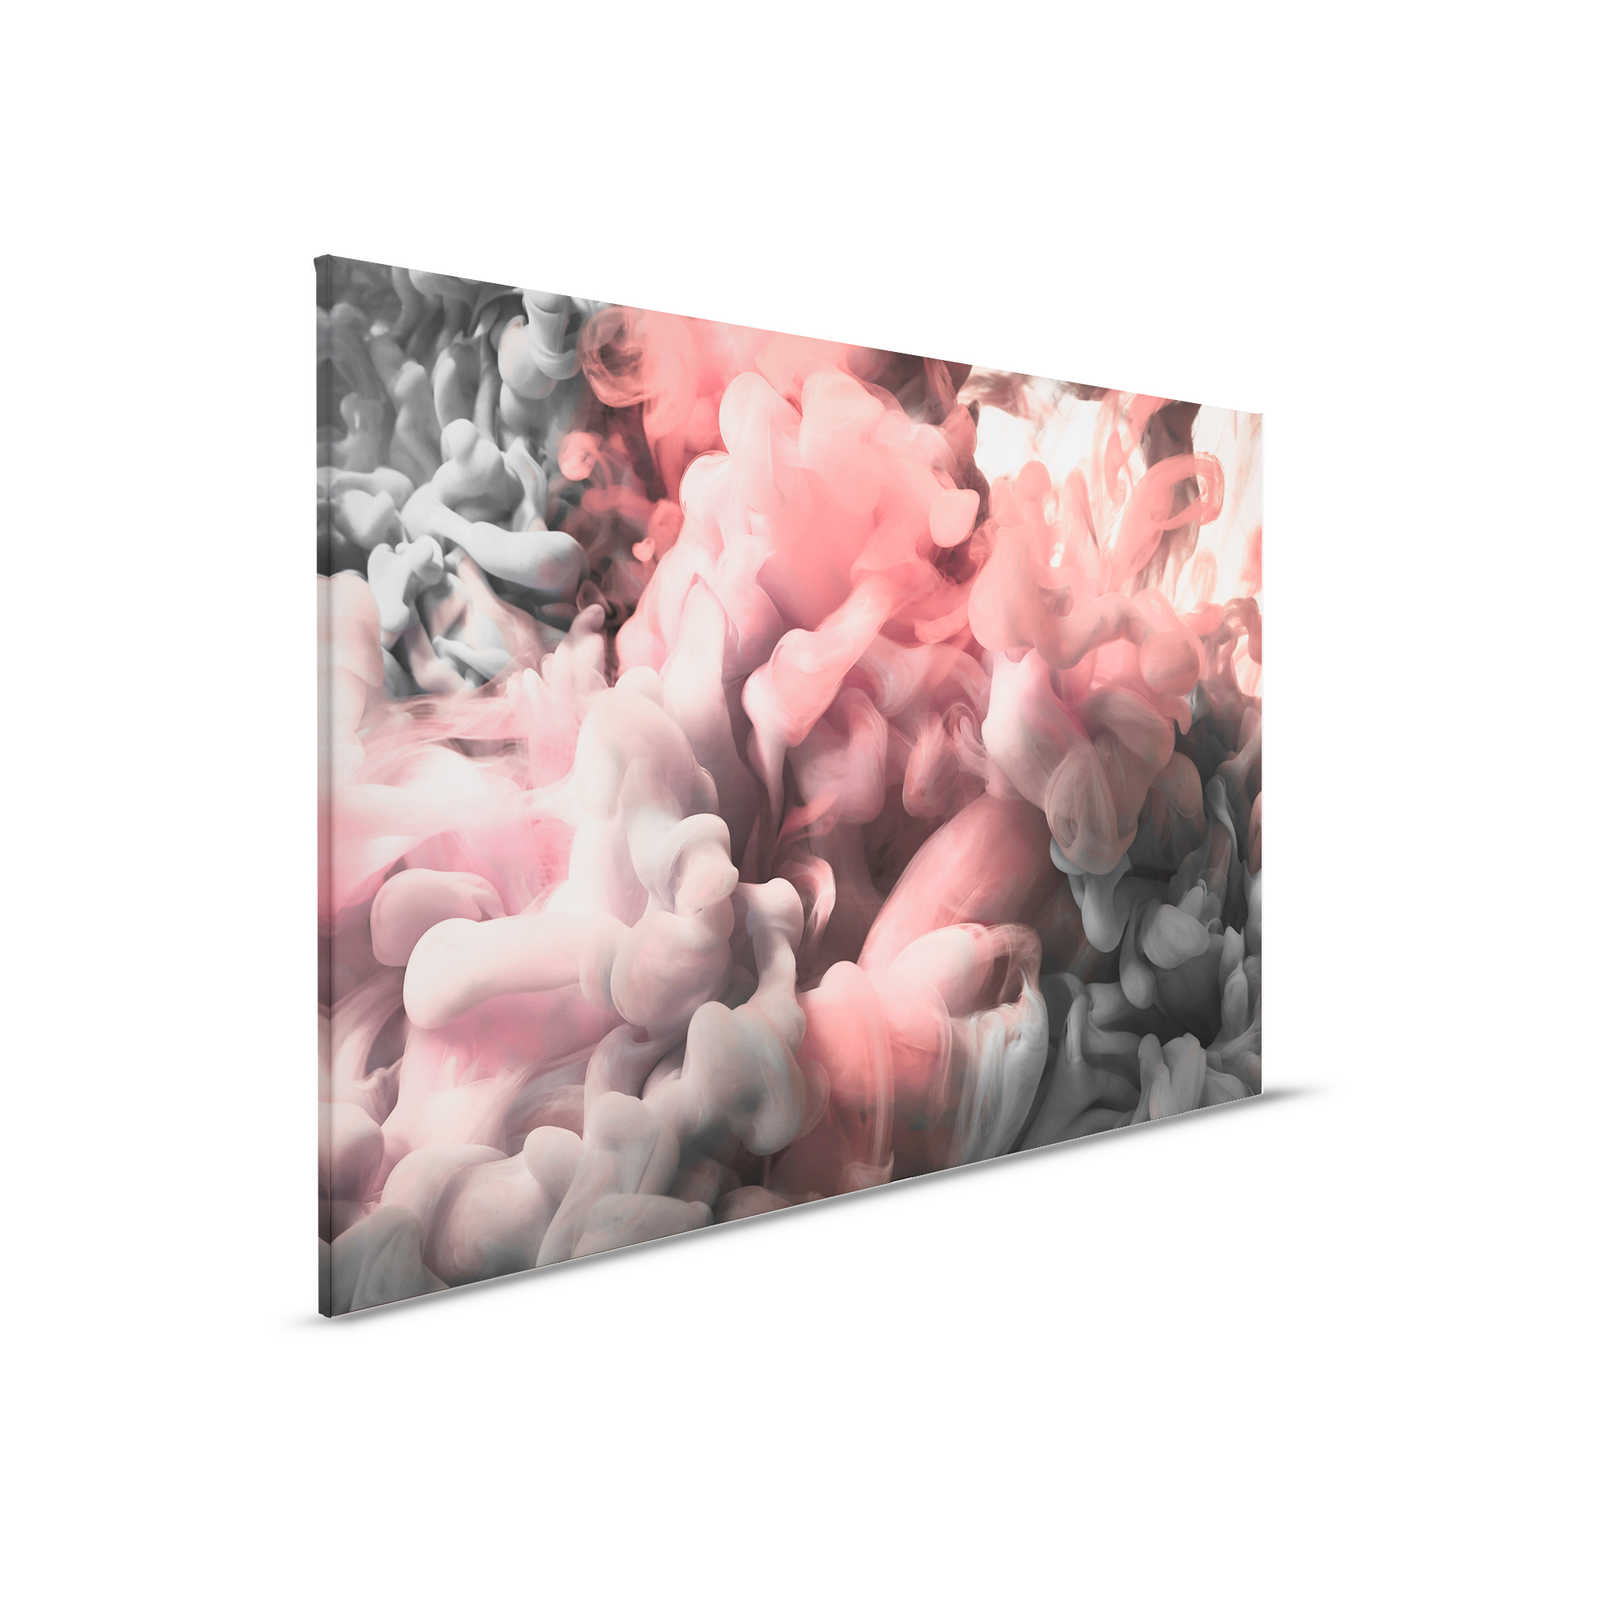         Coloured Smoke Canvas | Pink, Grey, White - 0.90 m x 0.60 m
    